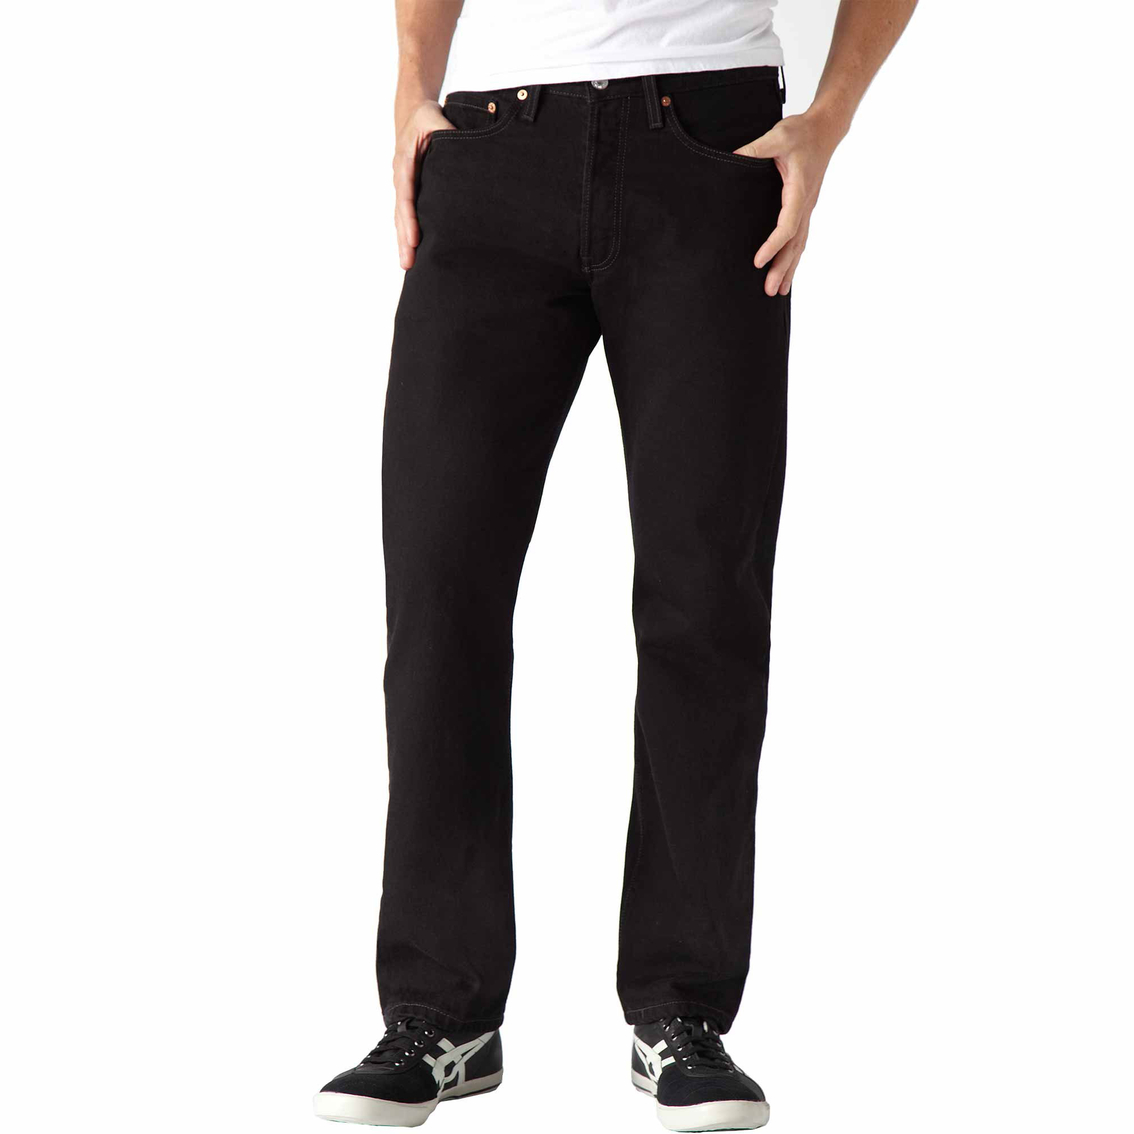 Levi's 501 5 Pocket Original Fit Jeans | Saturday - Wk 77 | Shop The ...